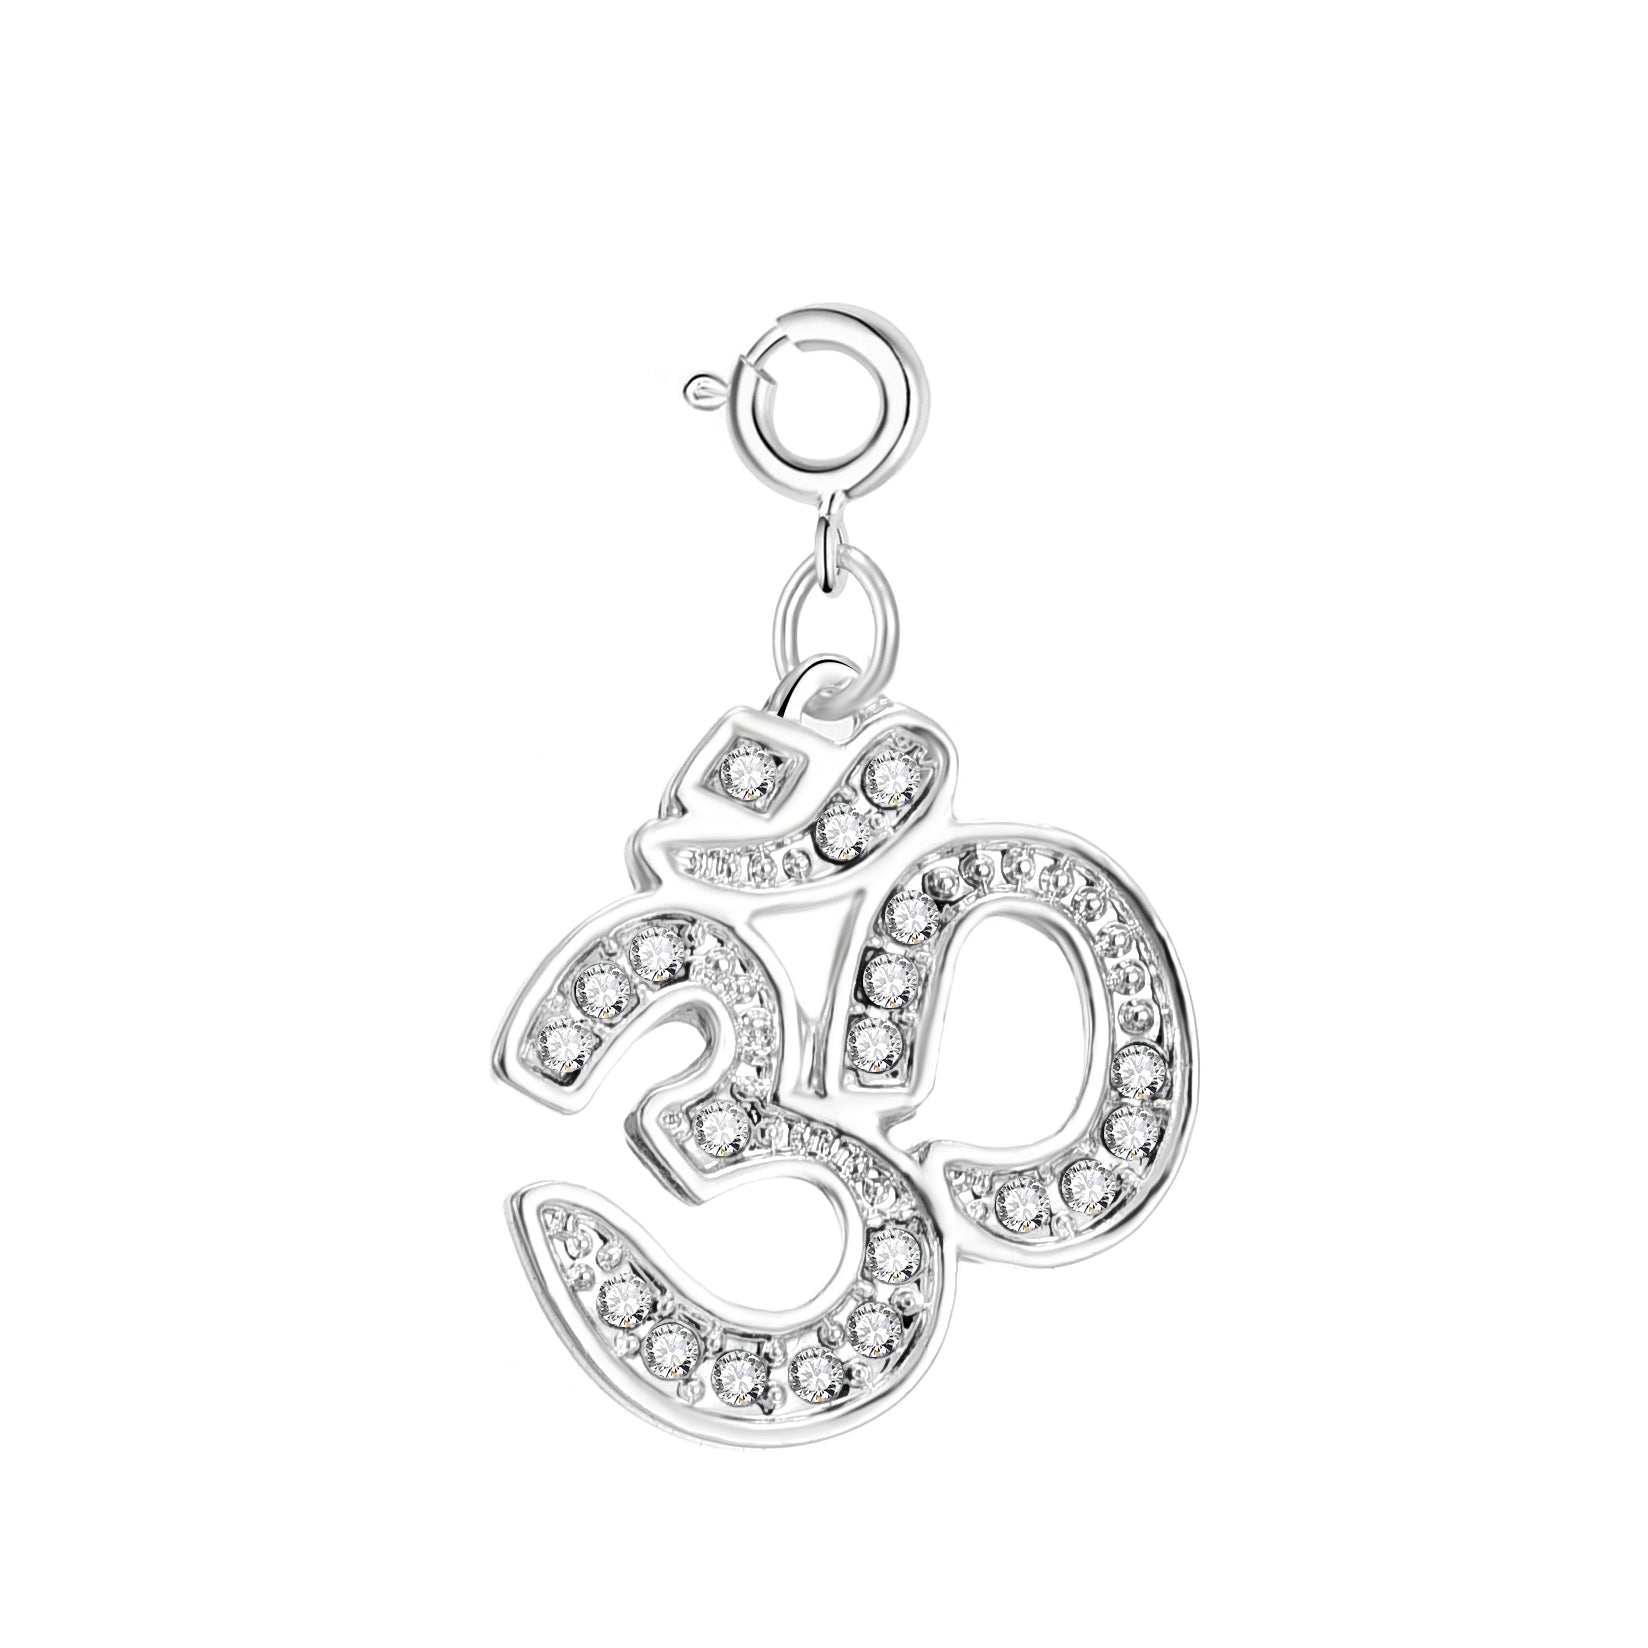 Om Charm Created with Zircondia® Crystals by Philip Jones Jewellery